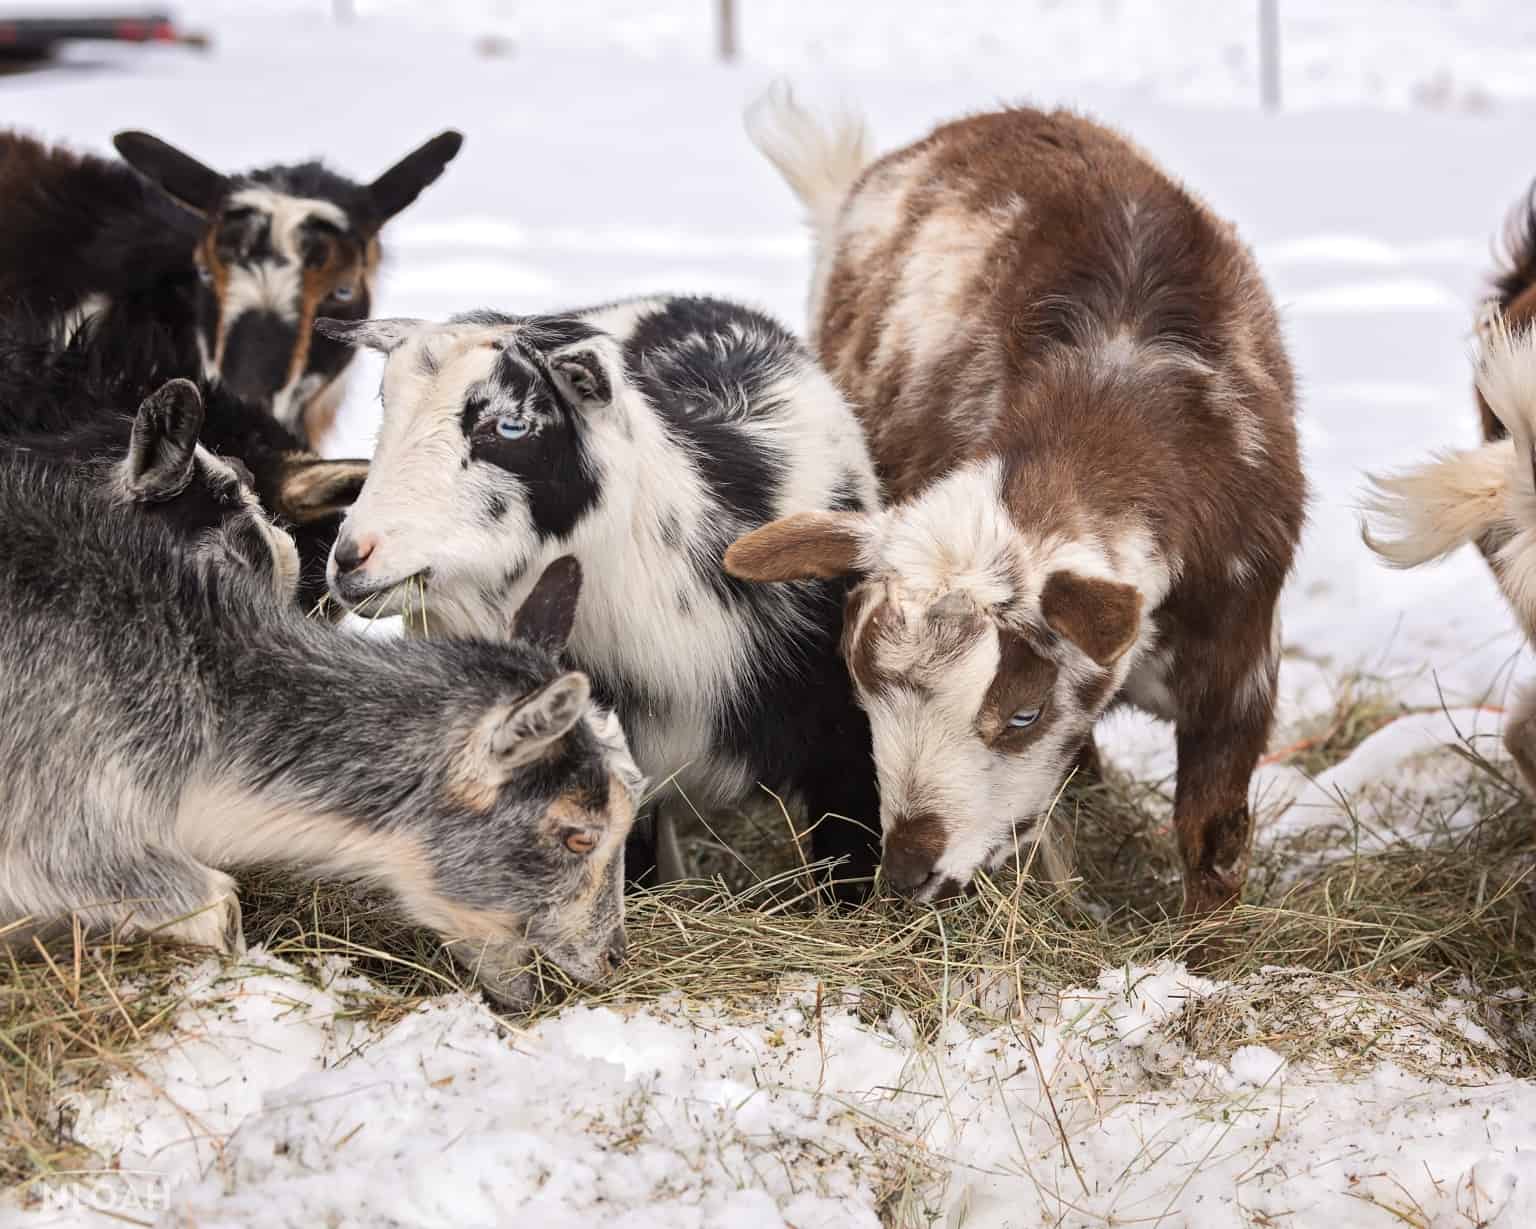 Nigerian Dwarf Goats eating hay, in snow